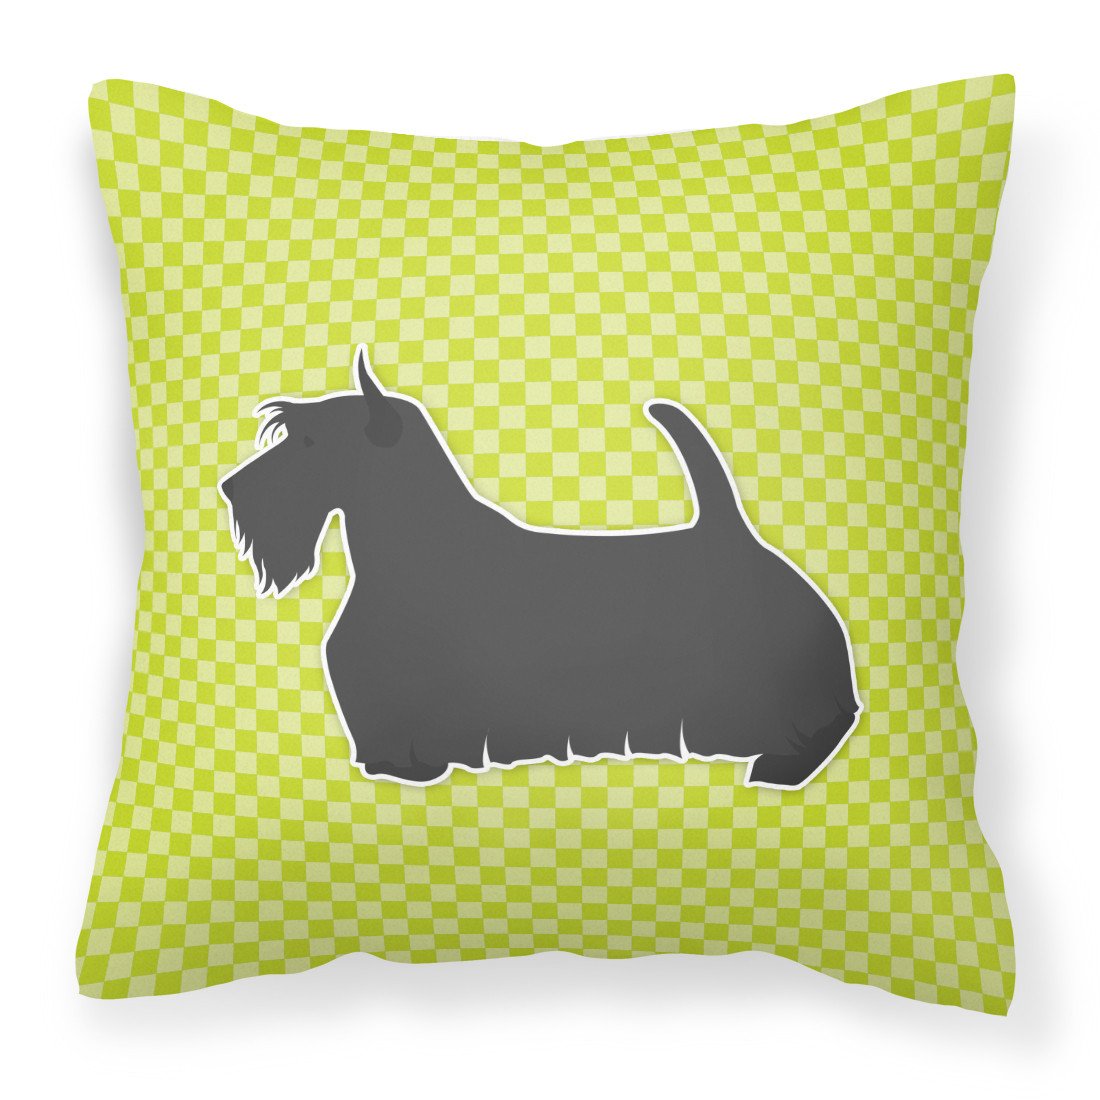 Scottish Terrier Checkerboard Green Fabric Decorative Pillow BB3869PW1818 by Caroline's Treasures